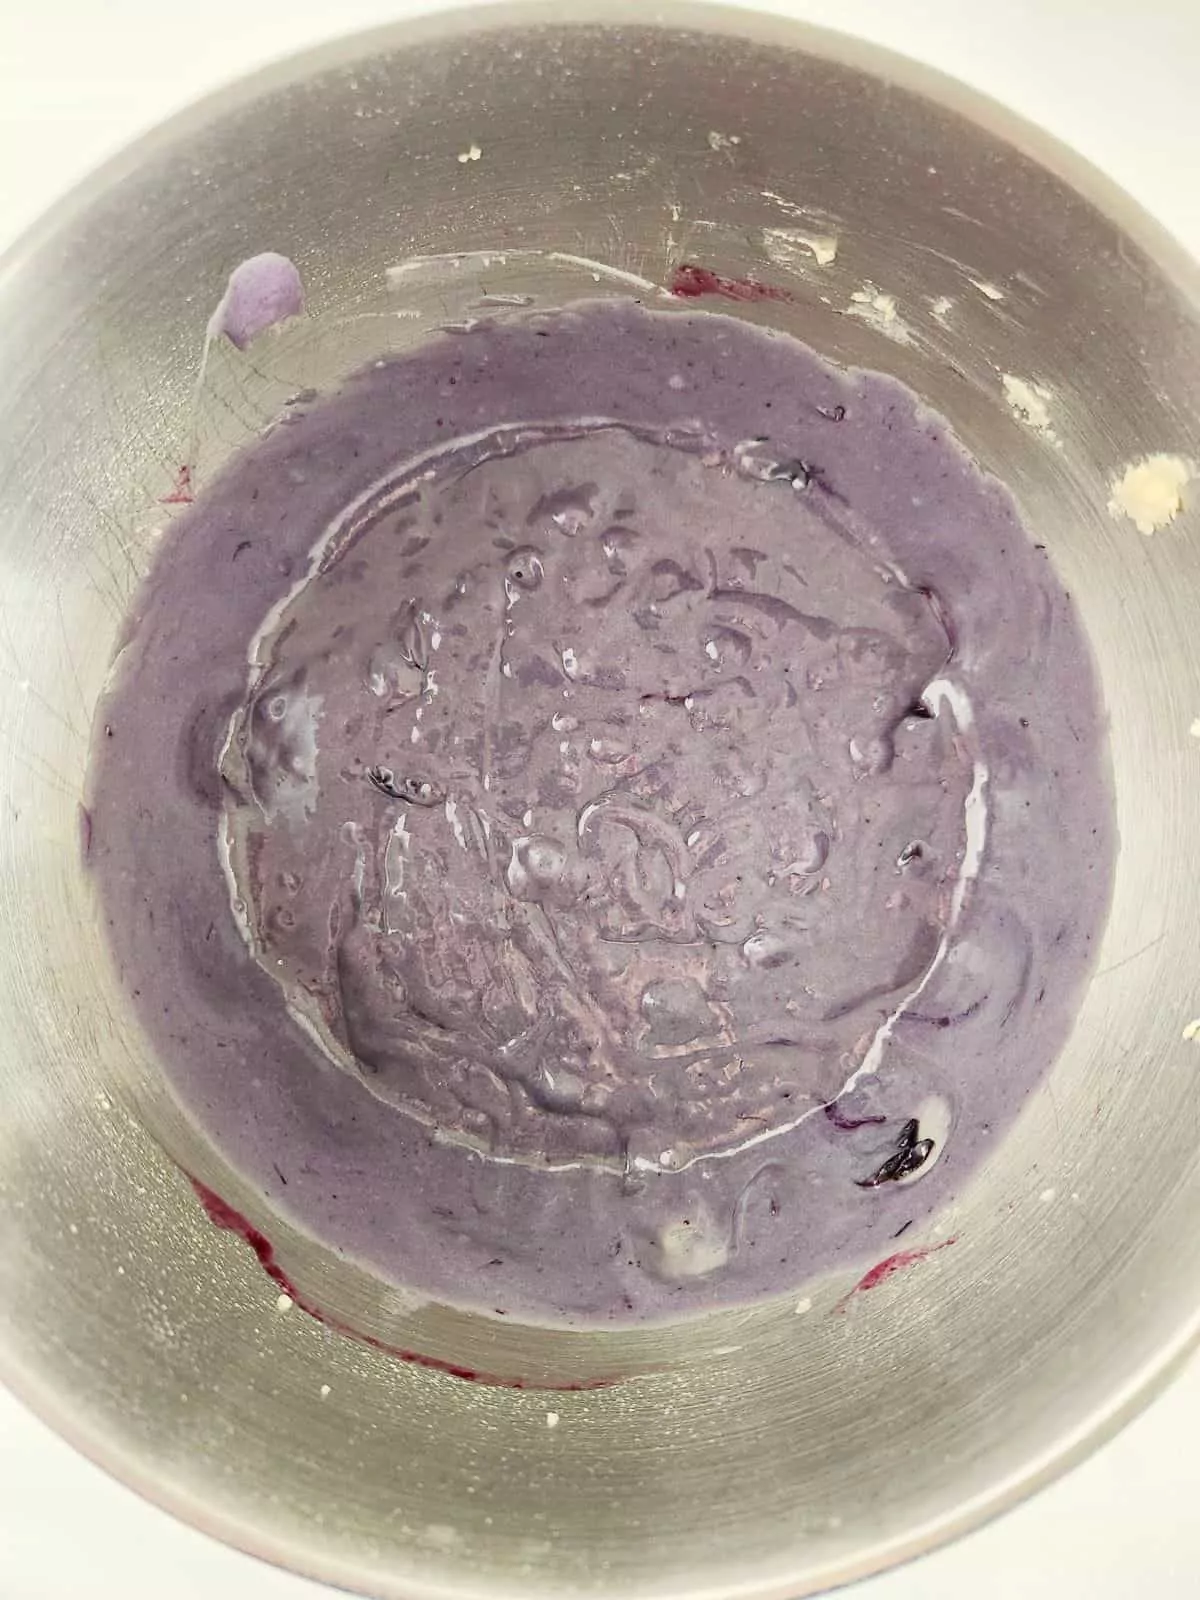 blueberry cupcake batter.